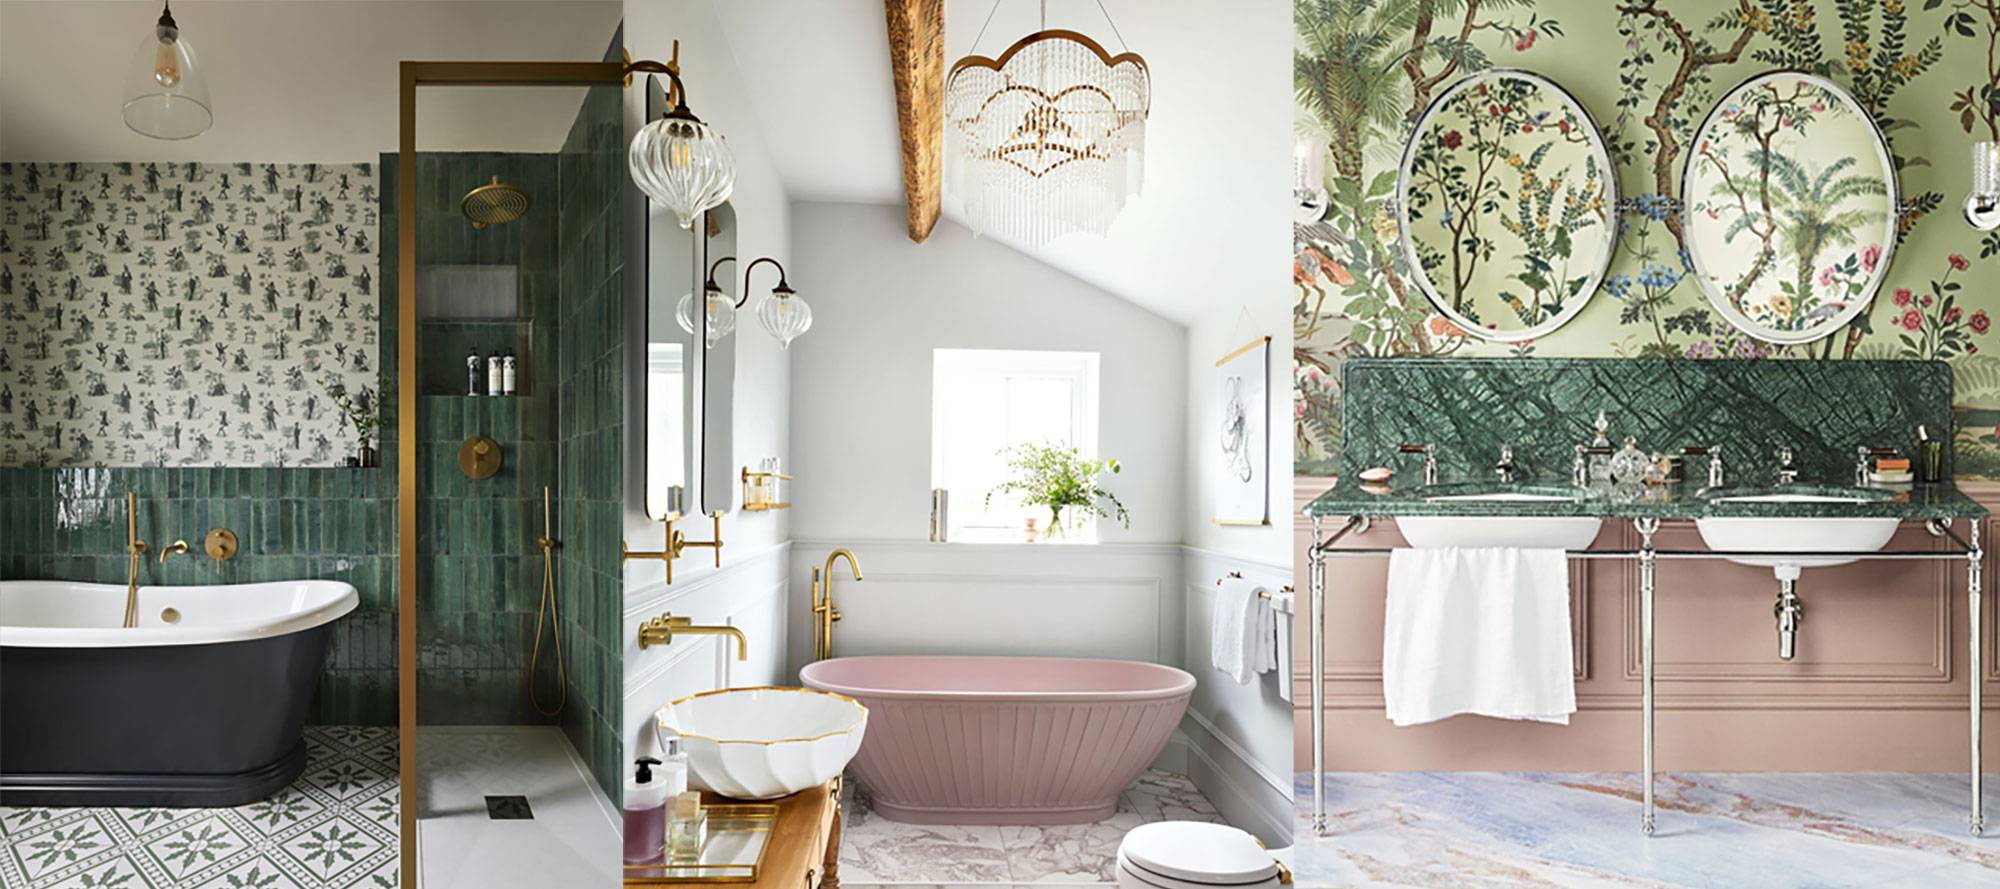 Traditional bathroom ideas 18 timeless styles & classic decor ...